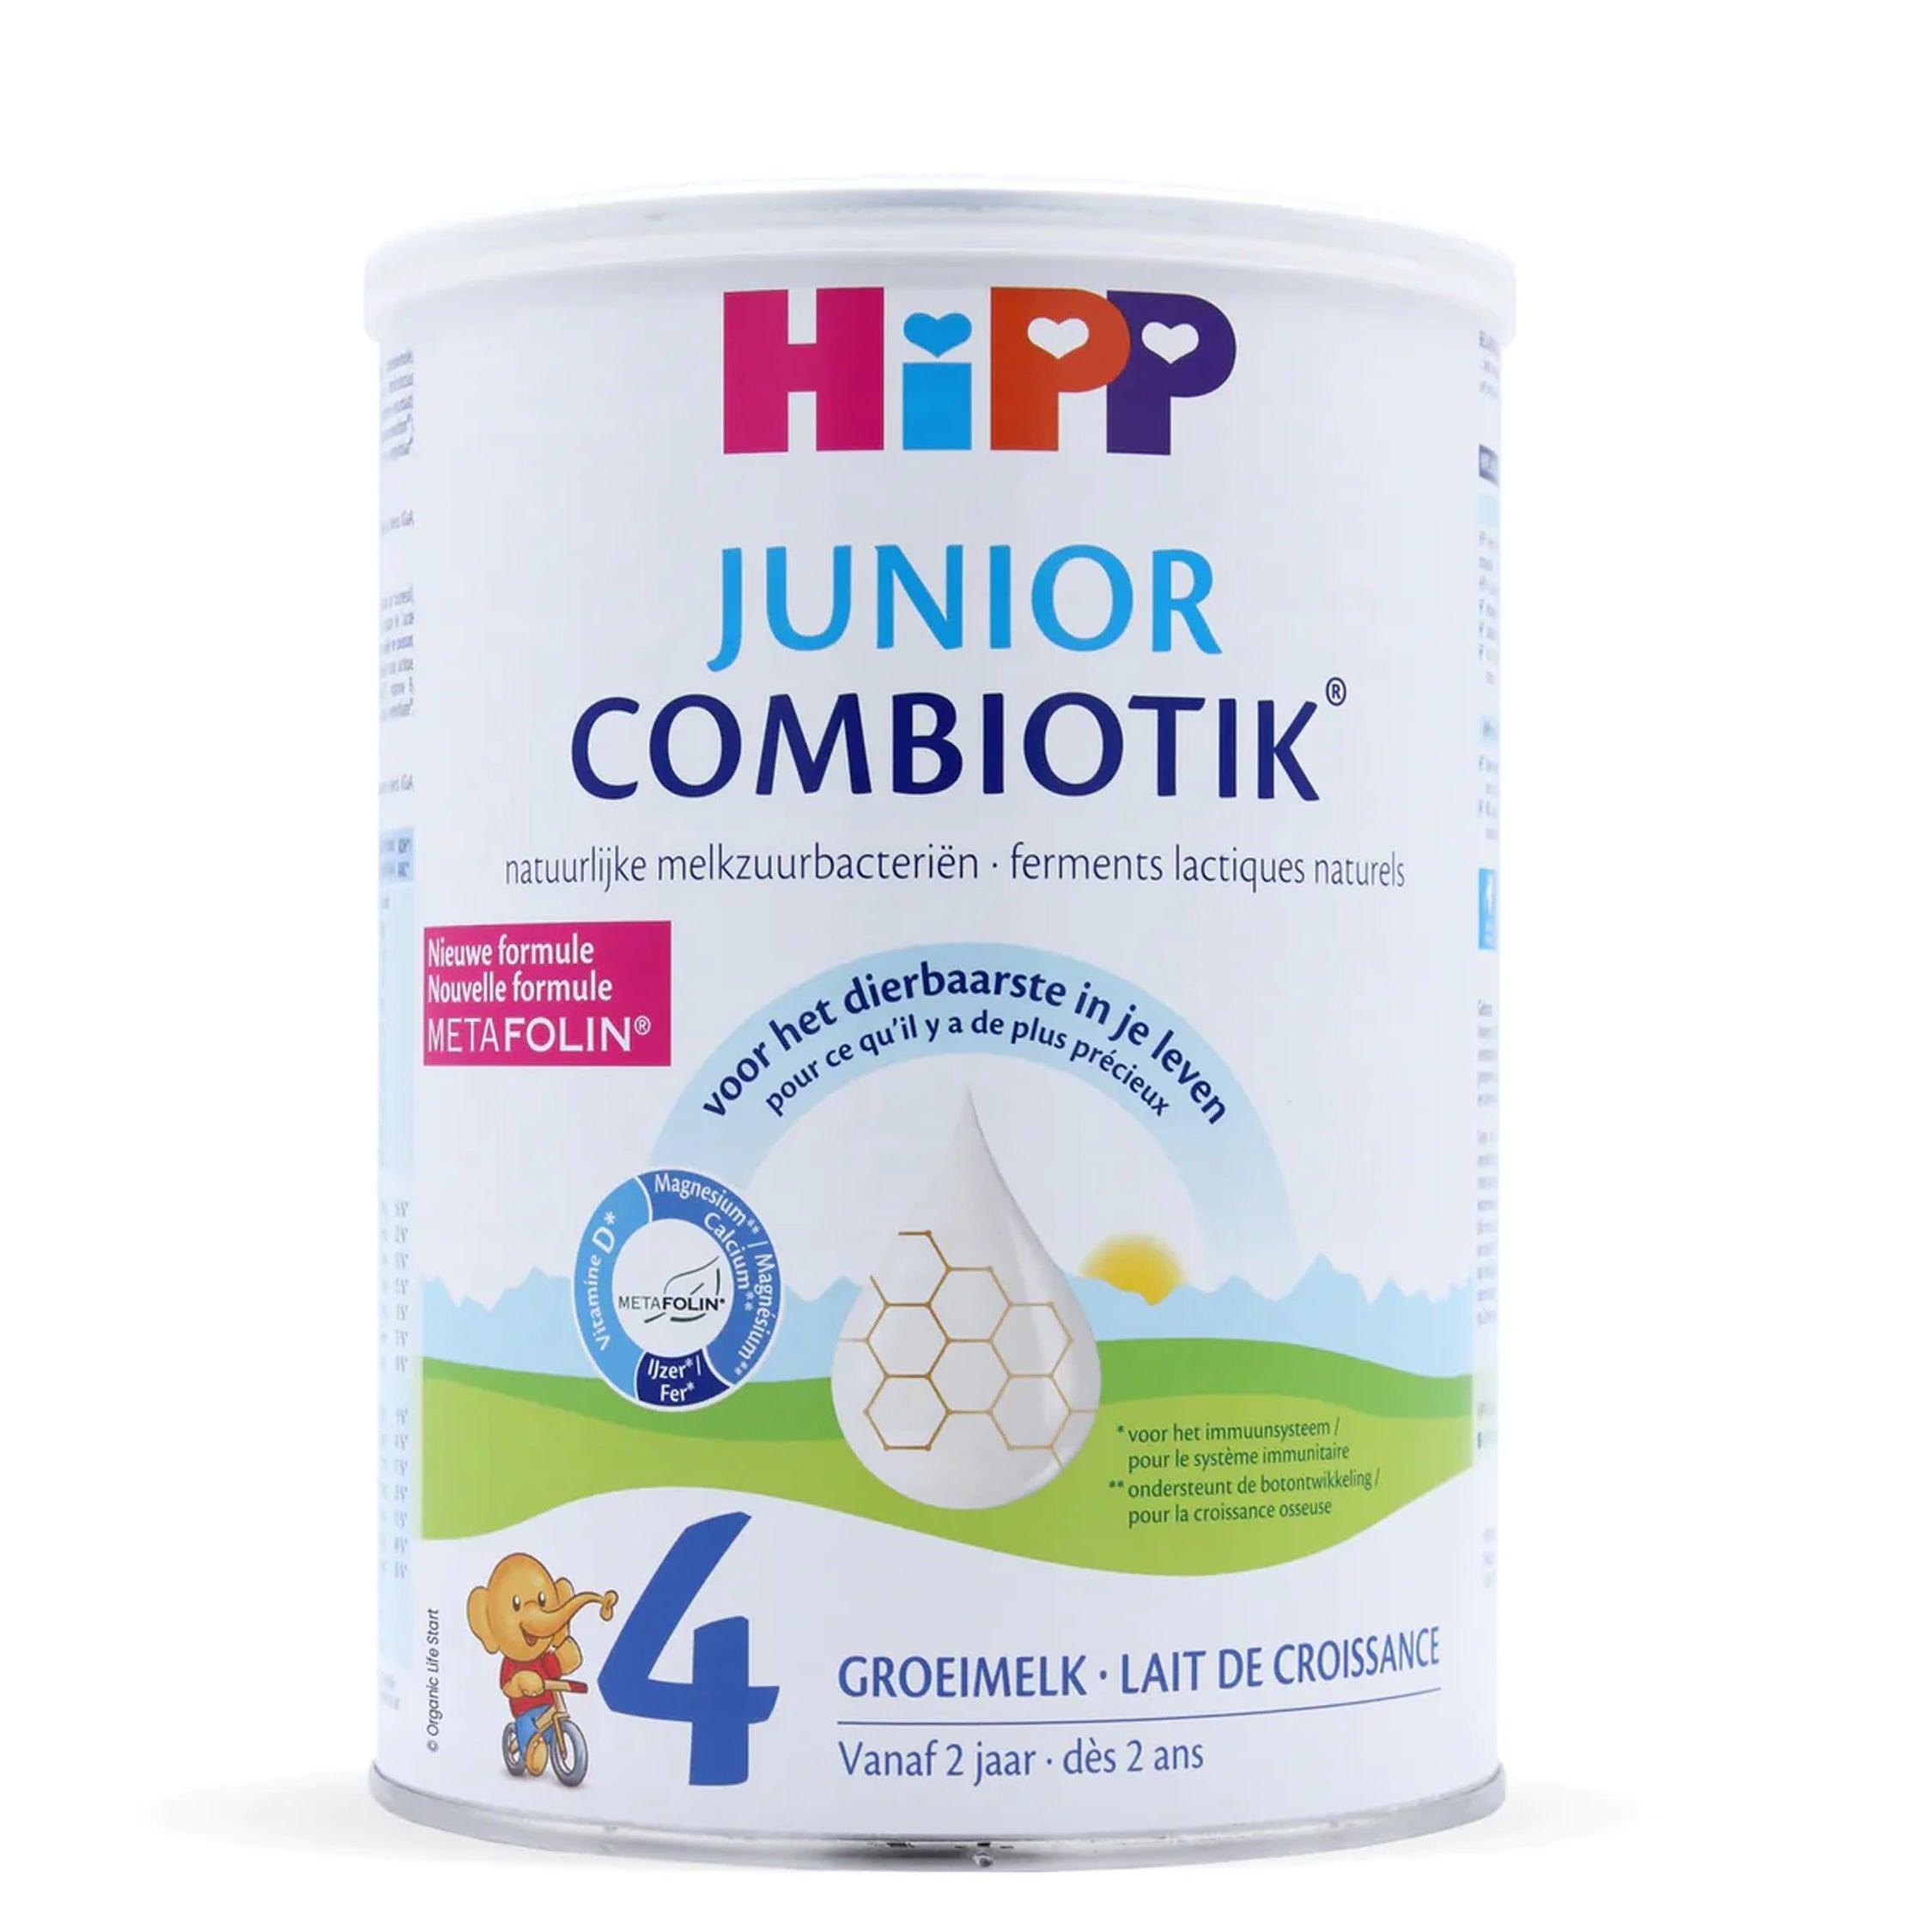 HiPP Stage 2 Organic Combiotic Formula (300g)